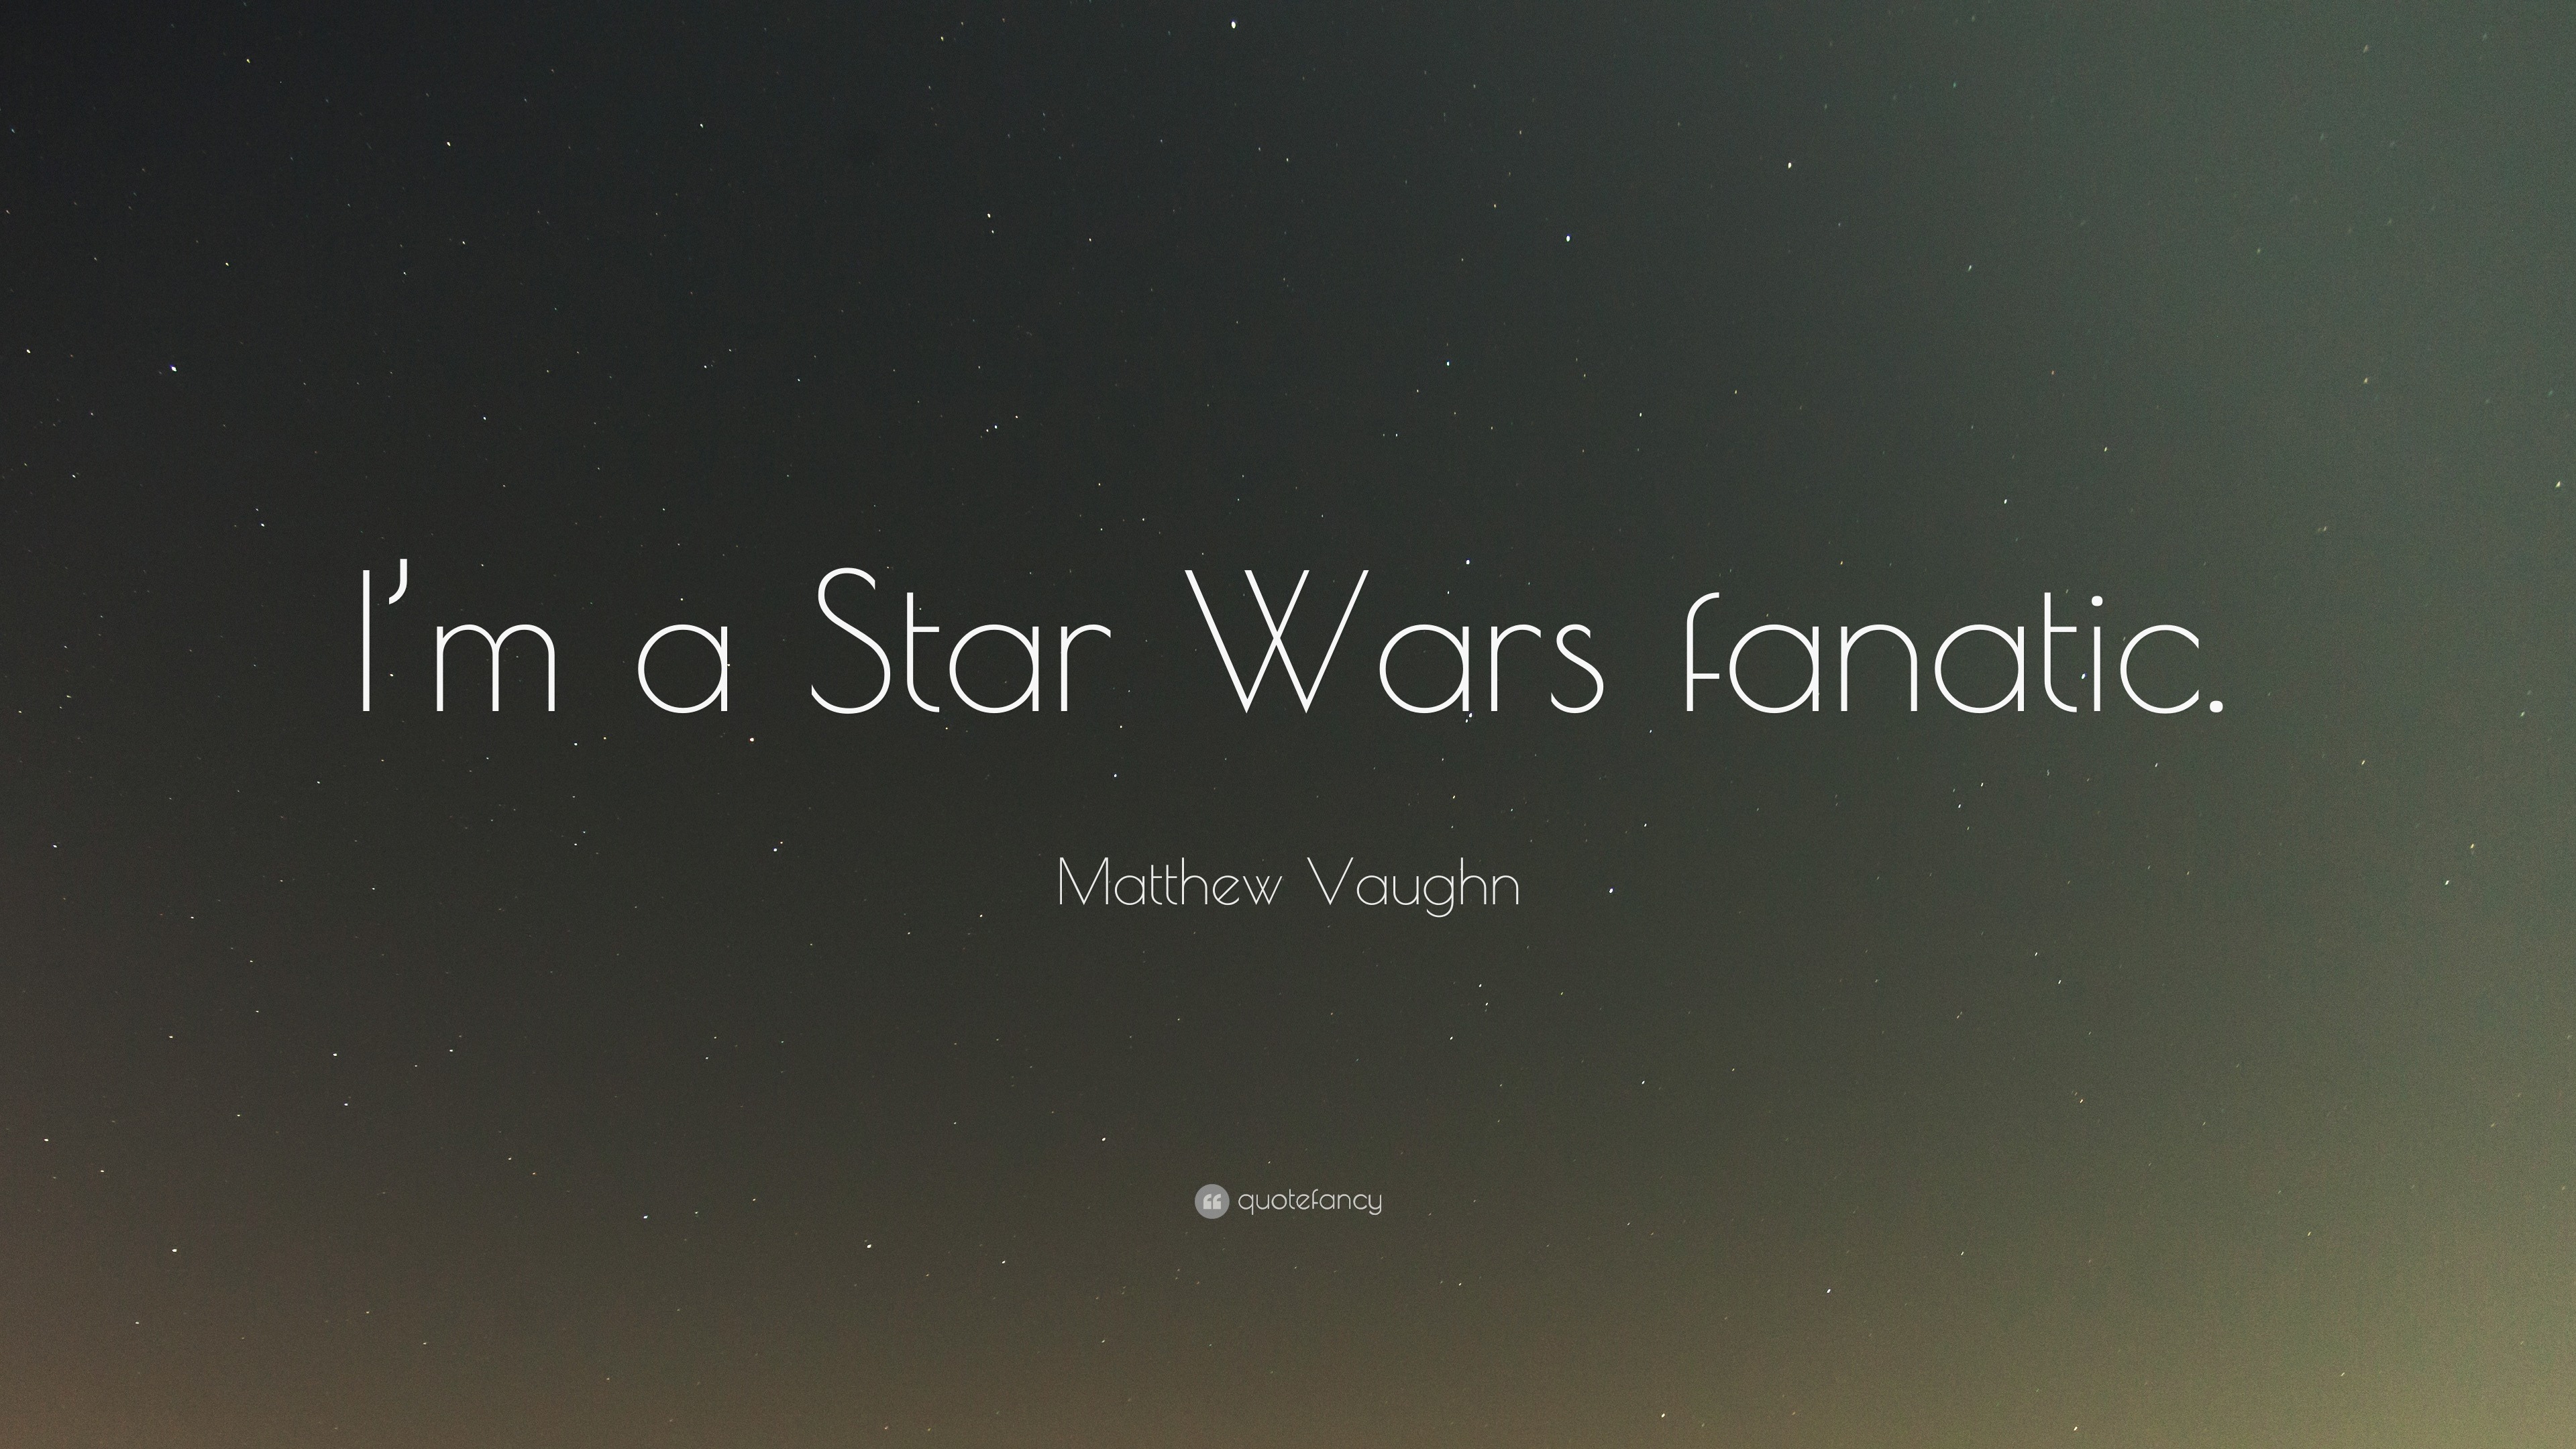 Matthew Vaughn Quote: “I'm a Star Wars fanatic.”